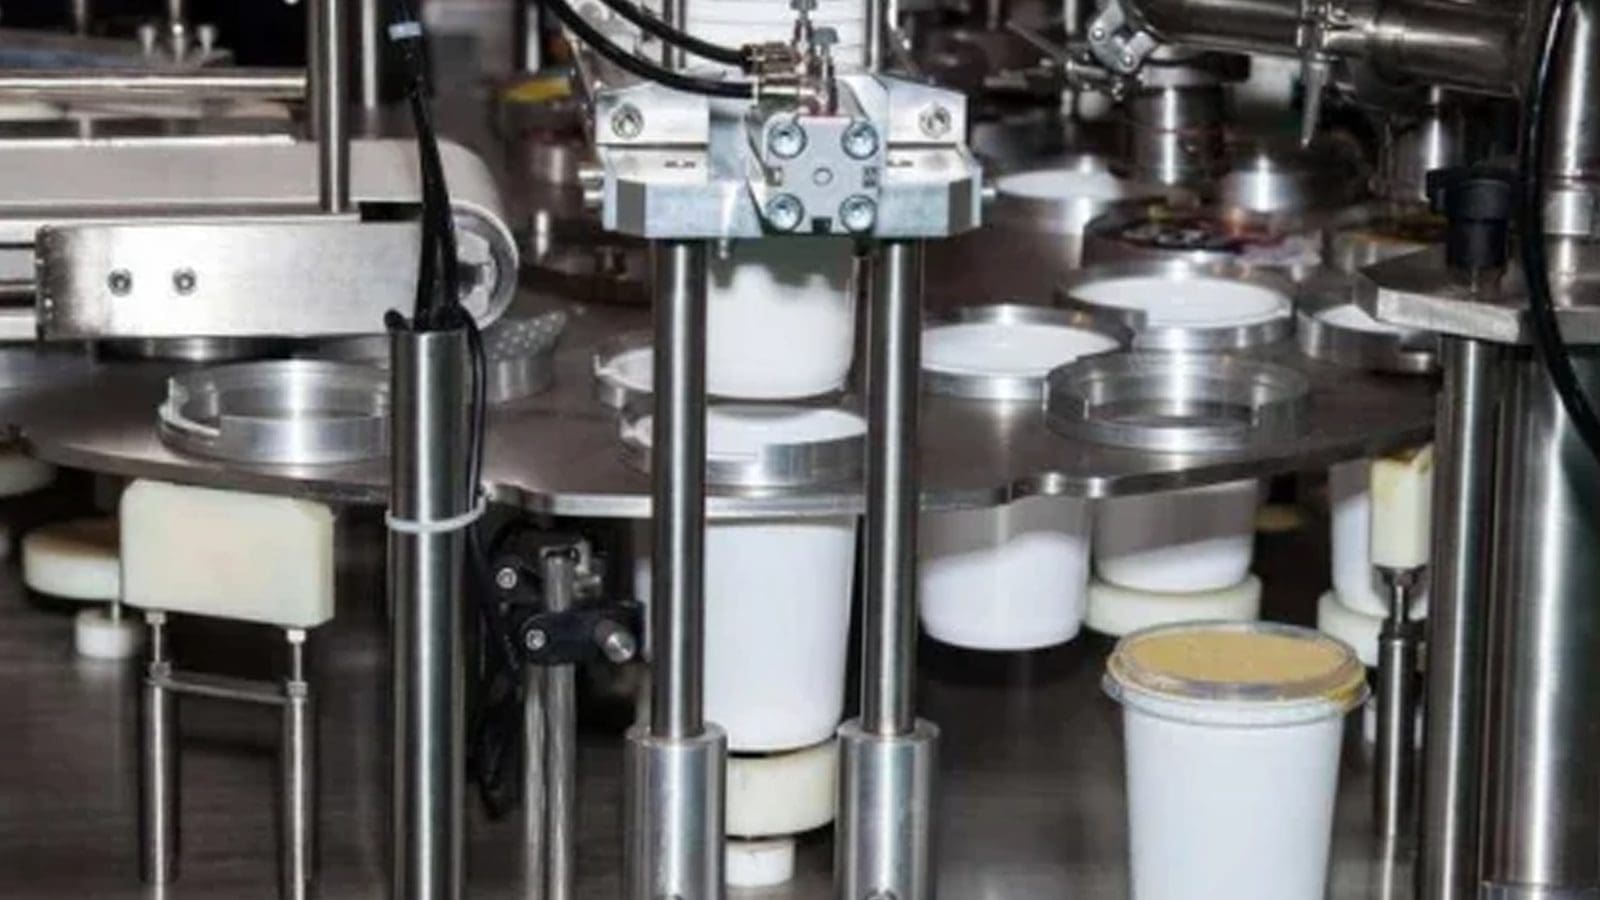 Microfiltration technology extending milk shelf life raises concerns over pasteurization-resistant bacteria